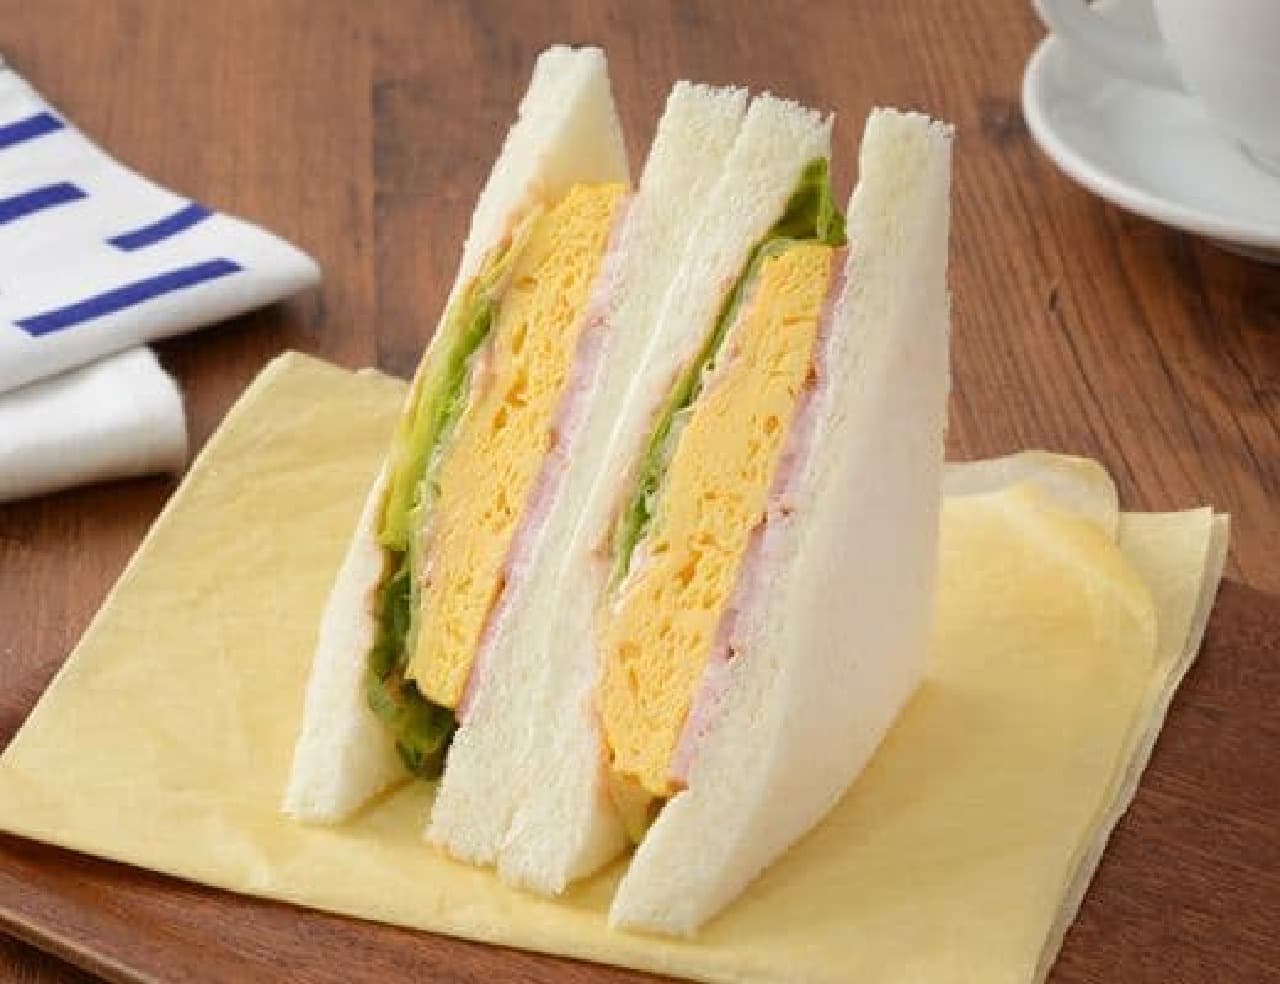 Lawson "Morning Set-style Sandwiches